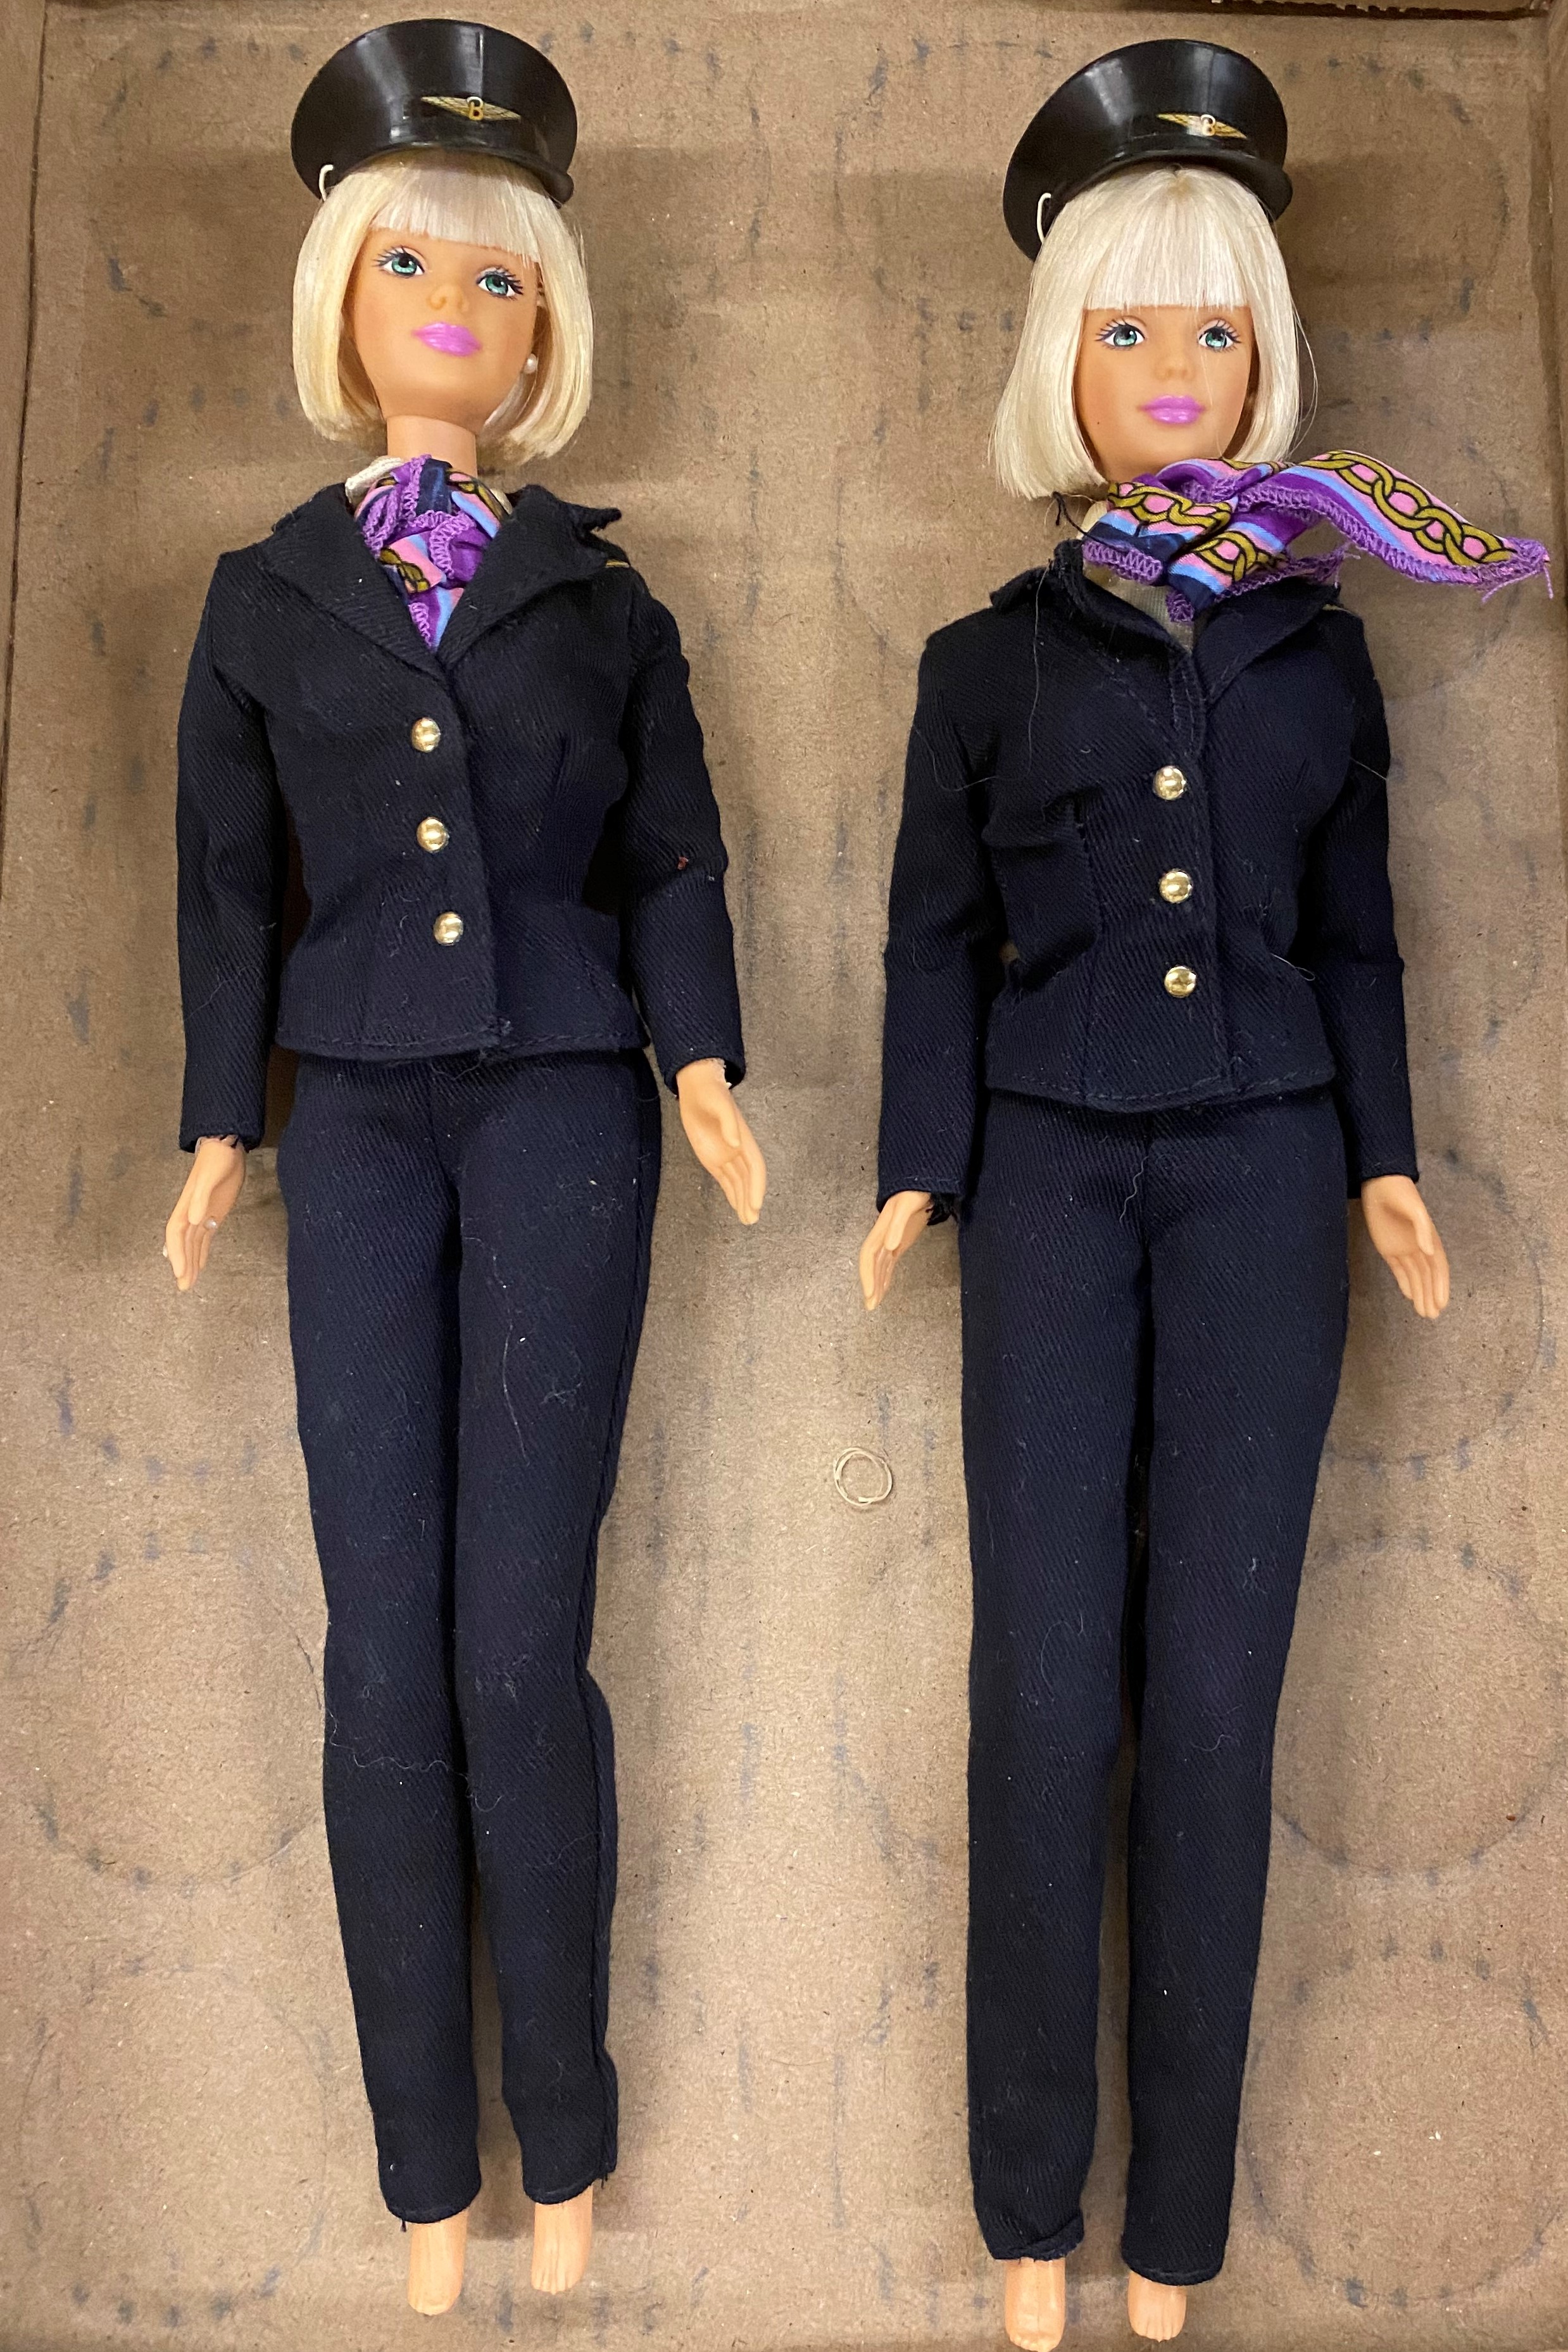 Item: Pair of Mattel Barbie Doll Airline Stewardess